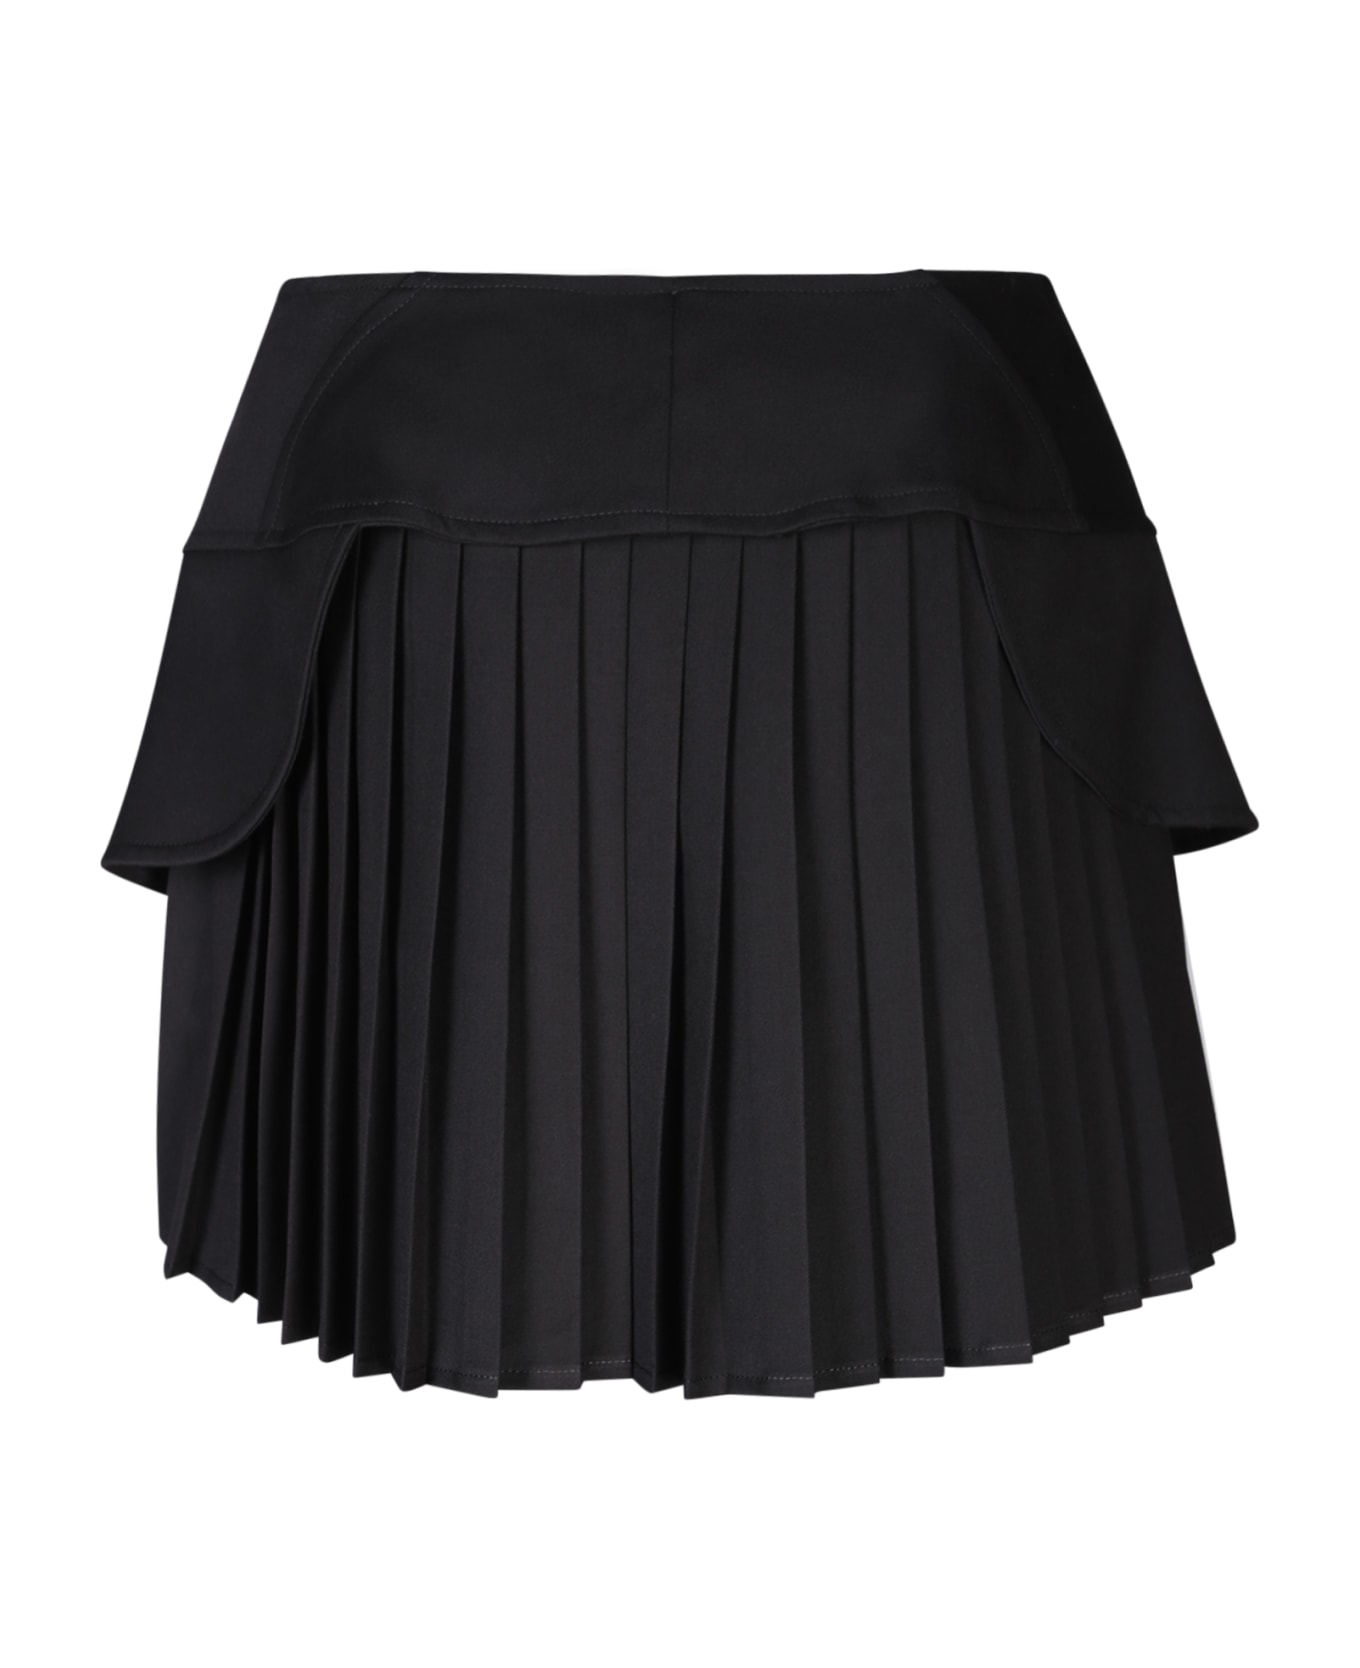 ANDREĀDAMO Black Flannel Mini-skirt - Black スカート